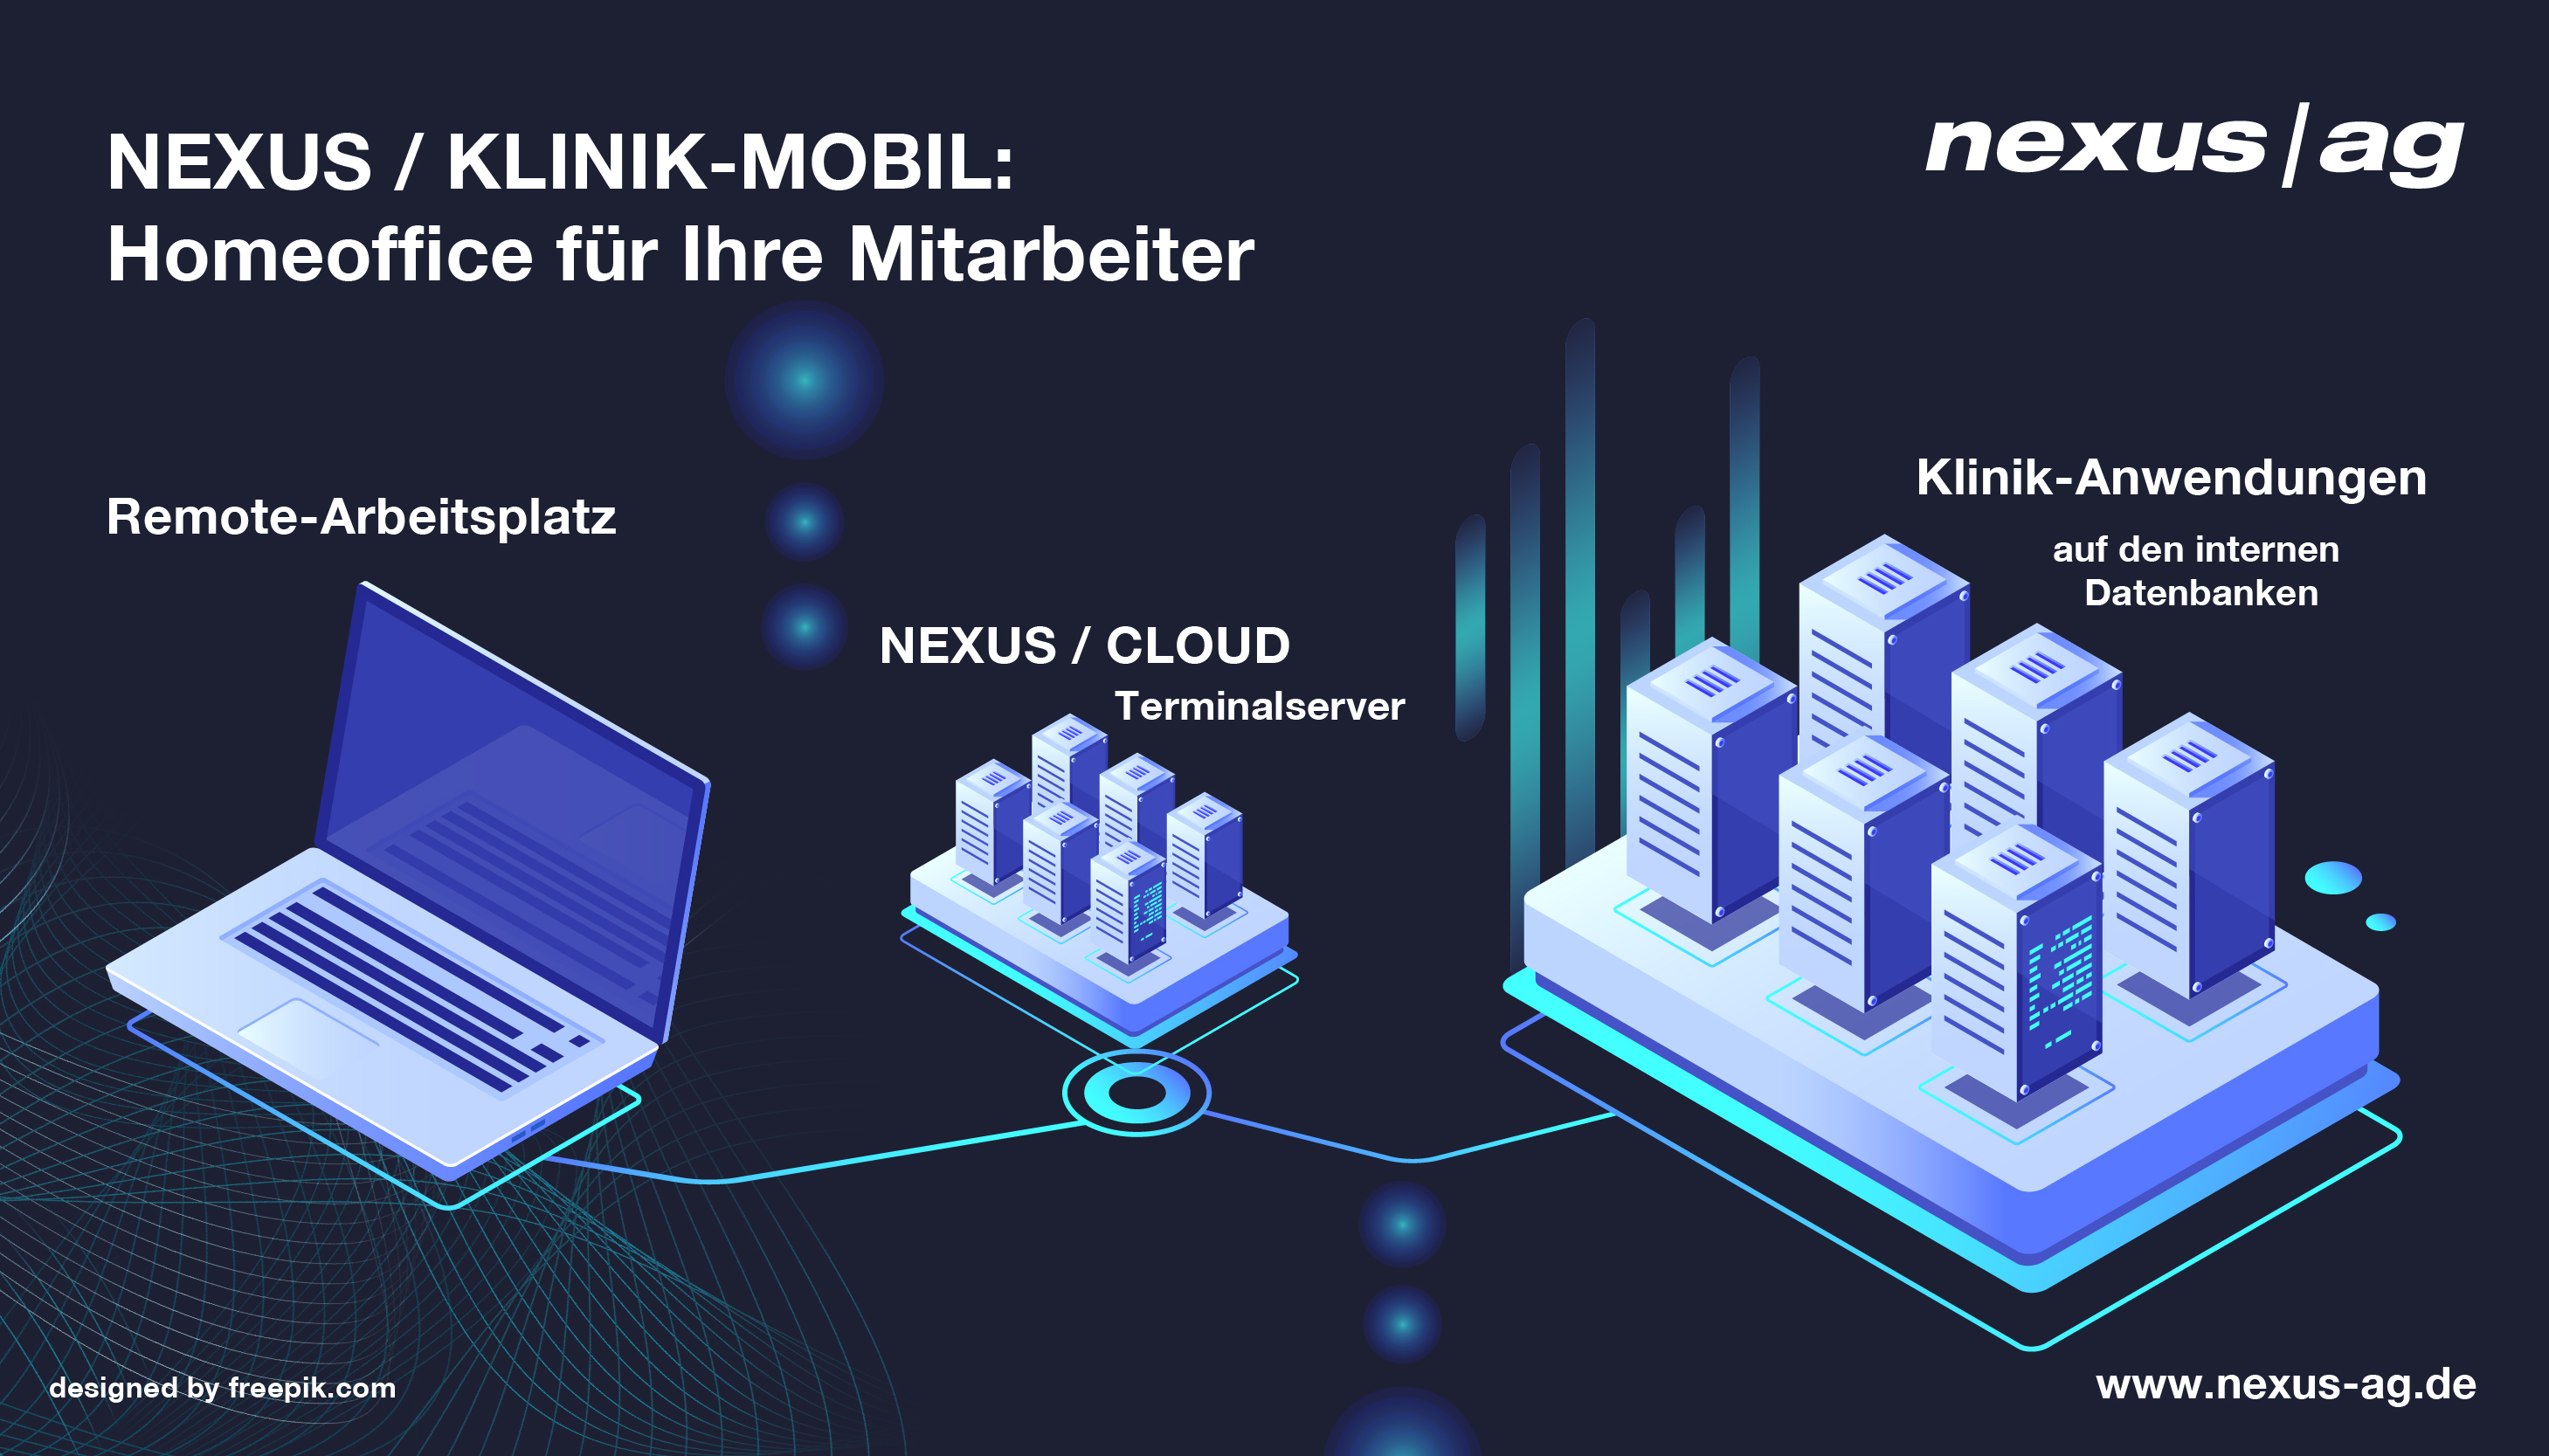 NEXUS / KLINIK-MOBIL